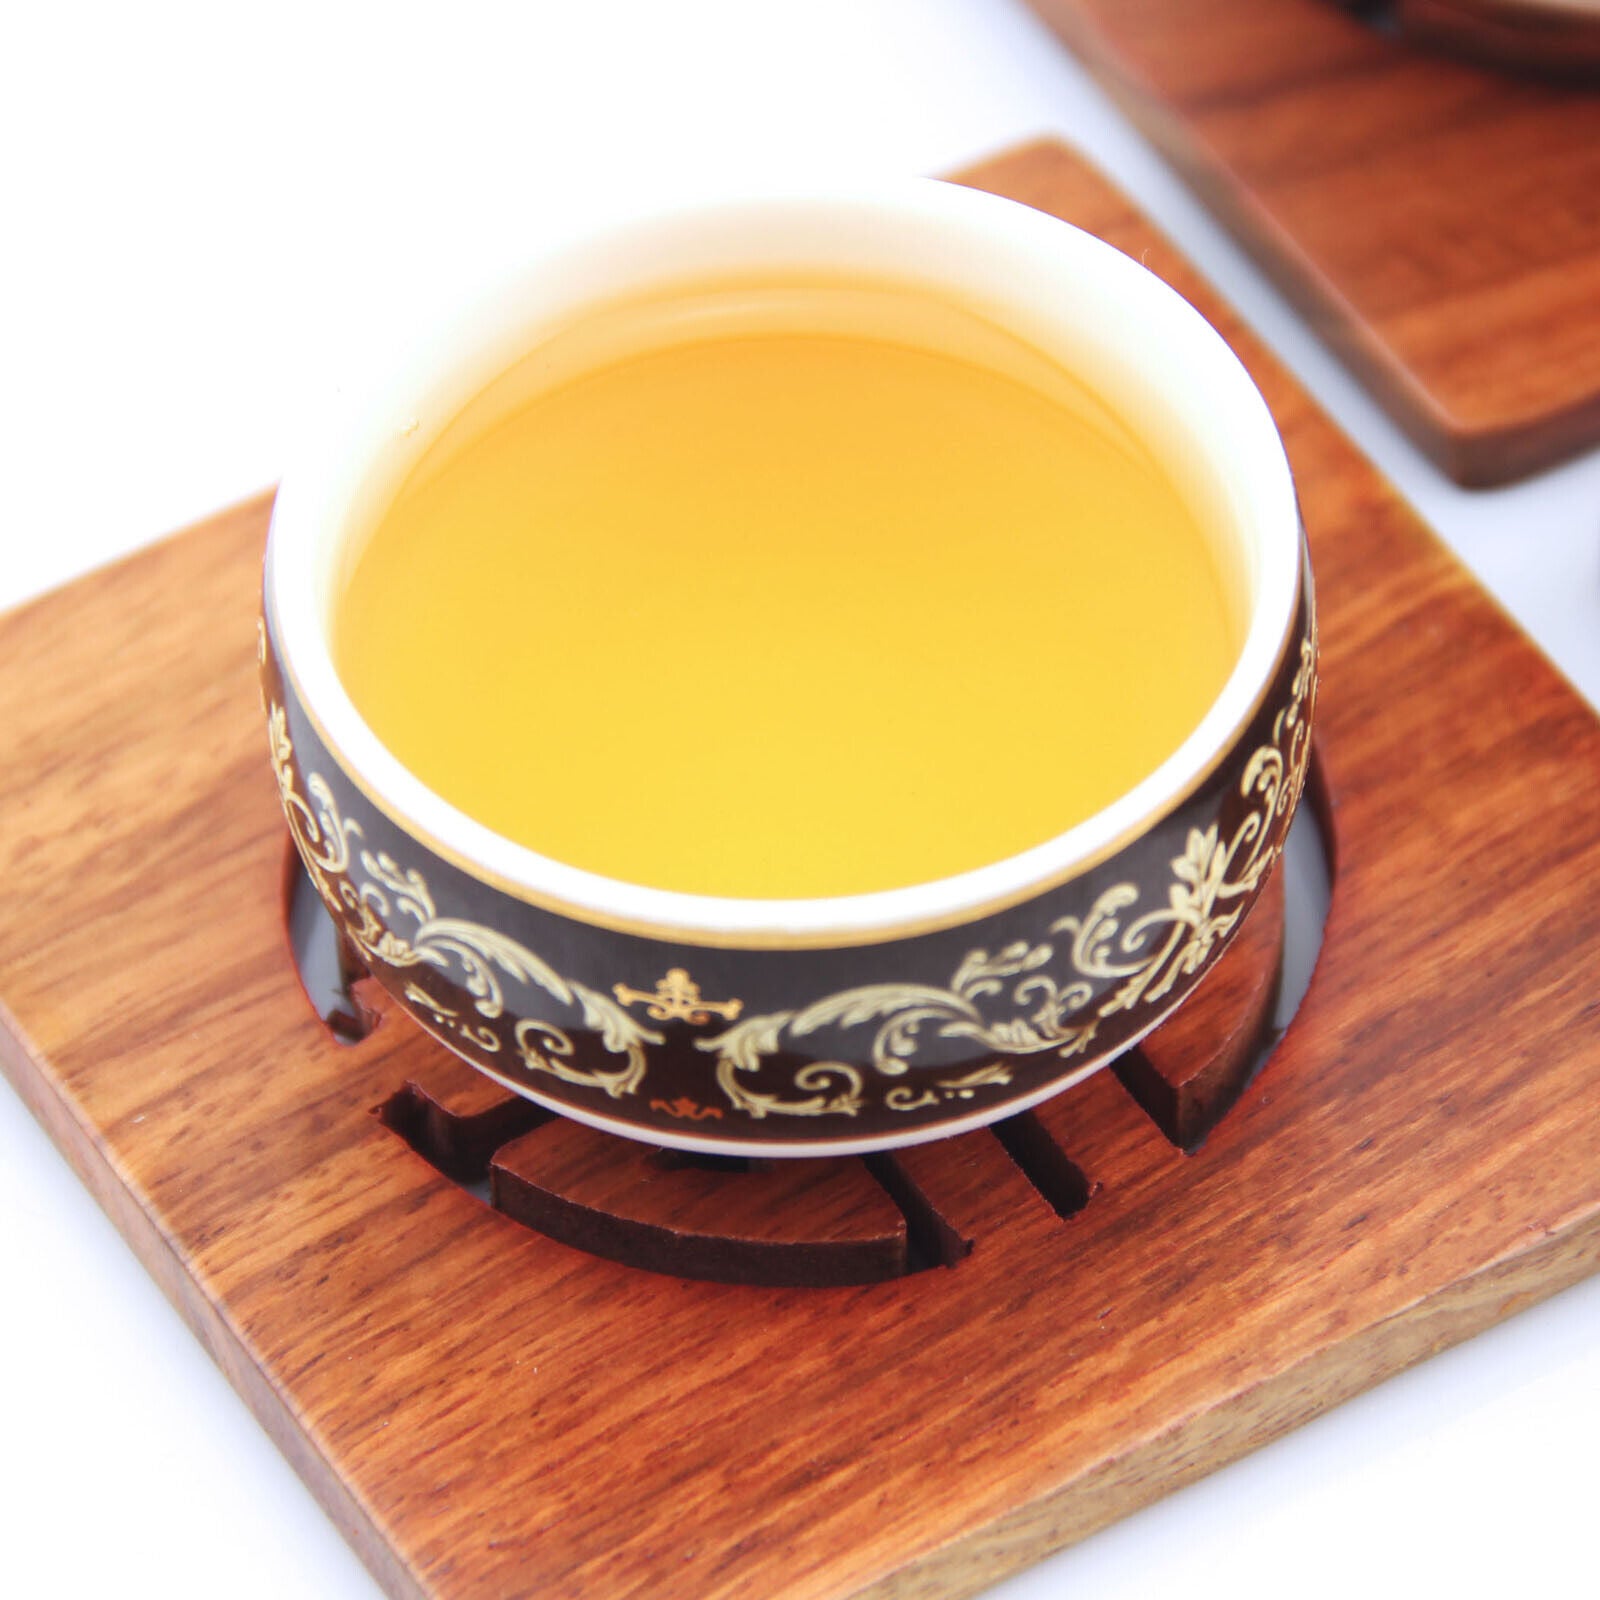 HelloYoung HELLOYOUNG Supreme Silver Needle White Tea Chinese Tips Bai hao Yin zhen Loose